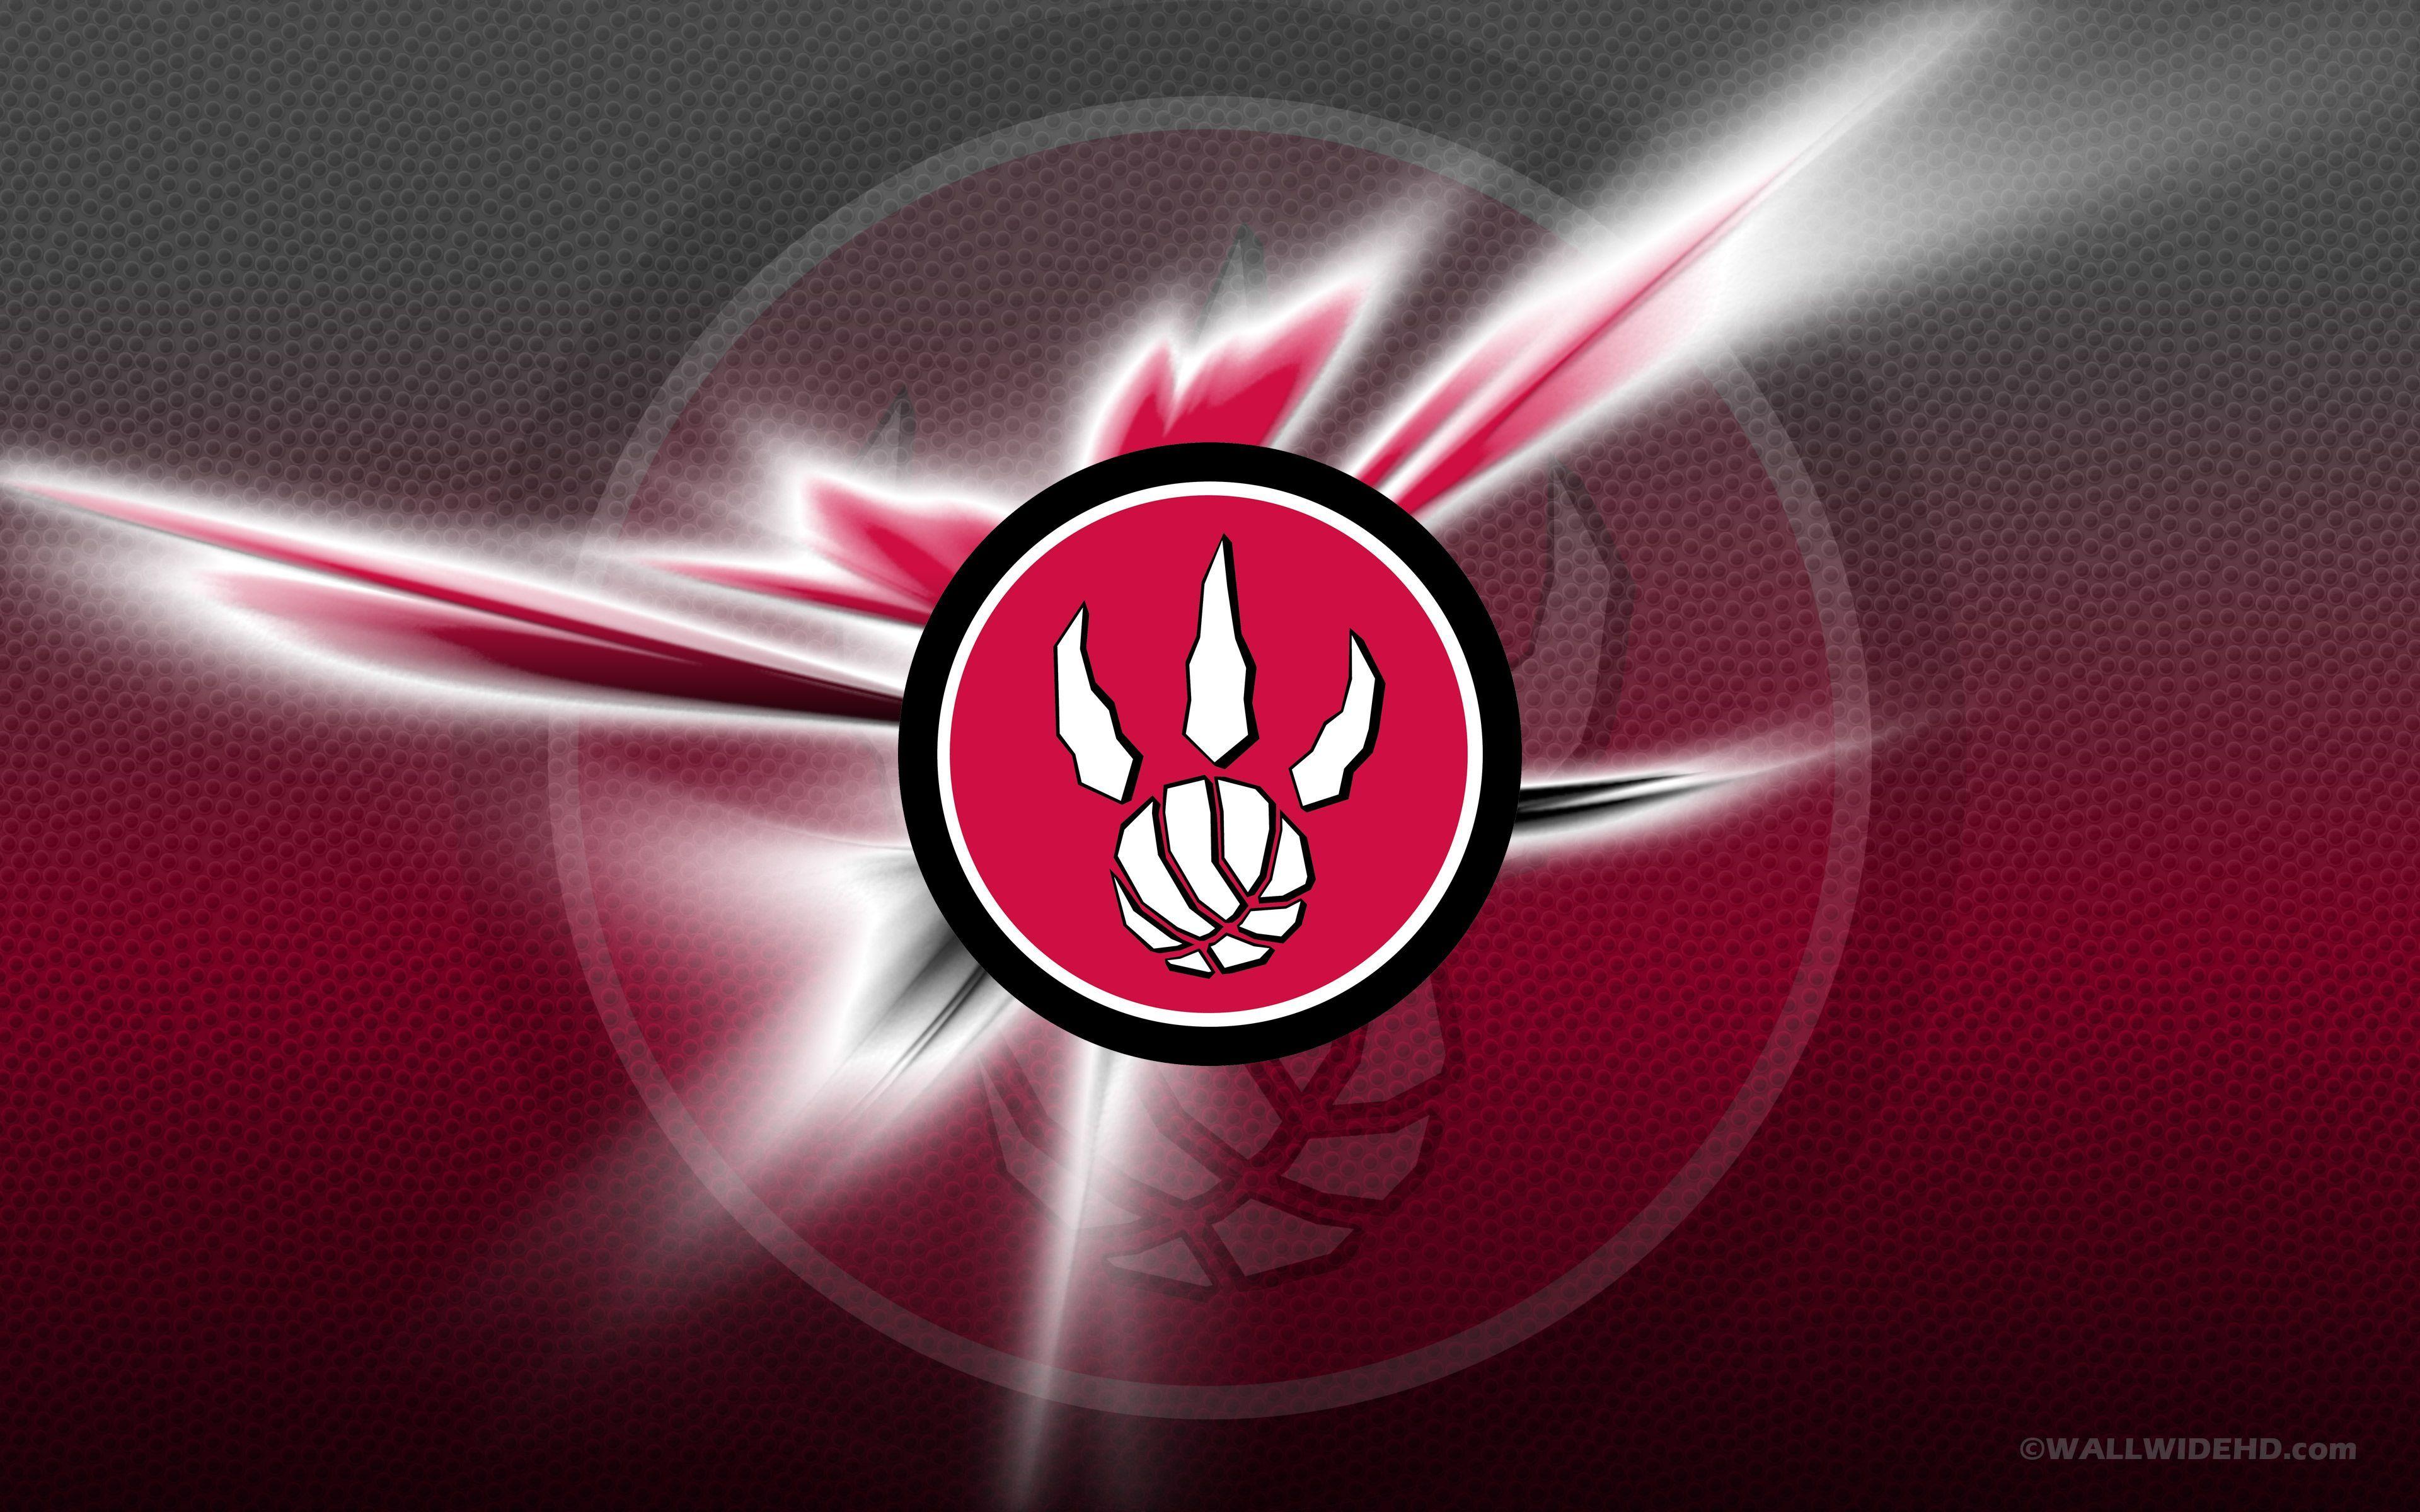 Cool Raptors Logo - images of the TORONTO raptors basketball logos | Toronto Raptors ...